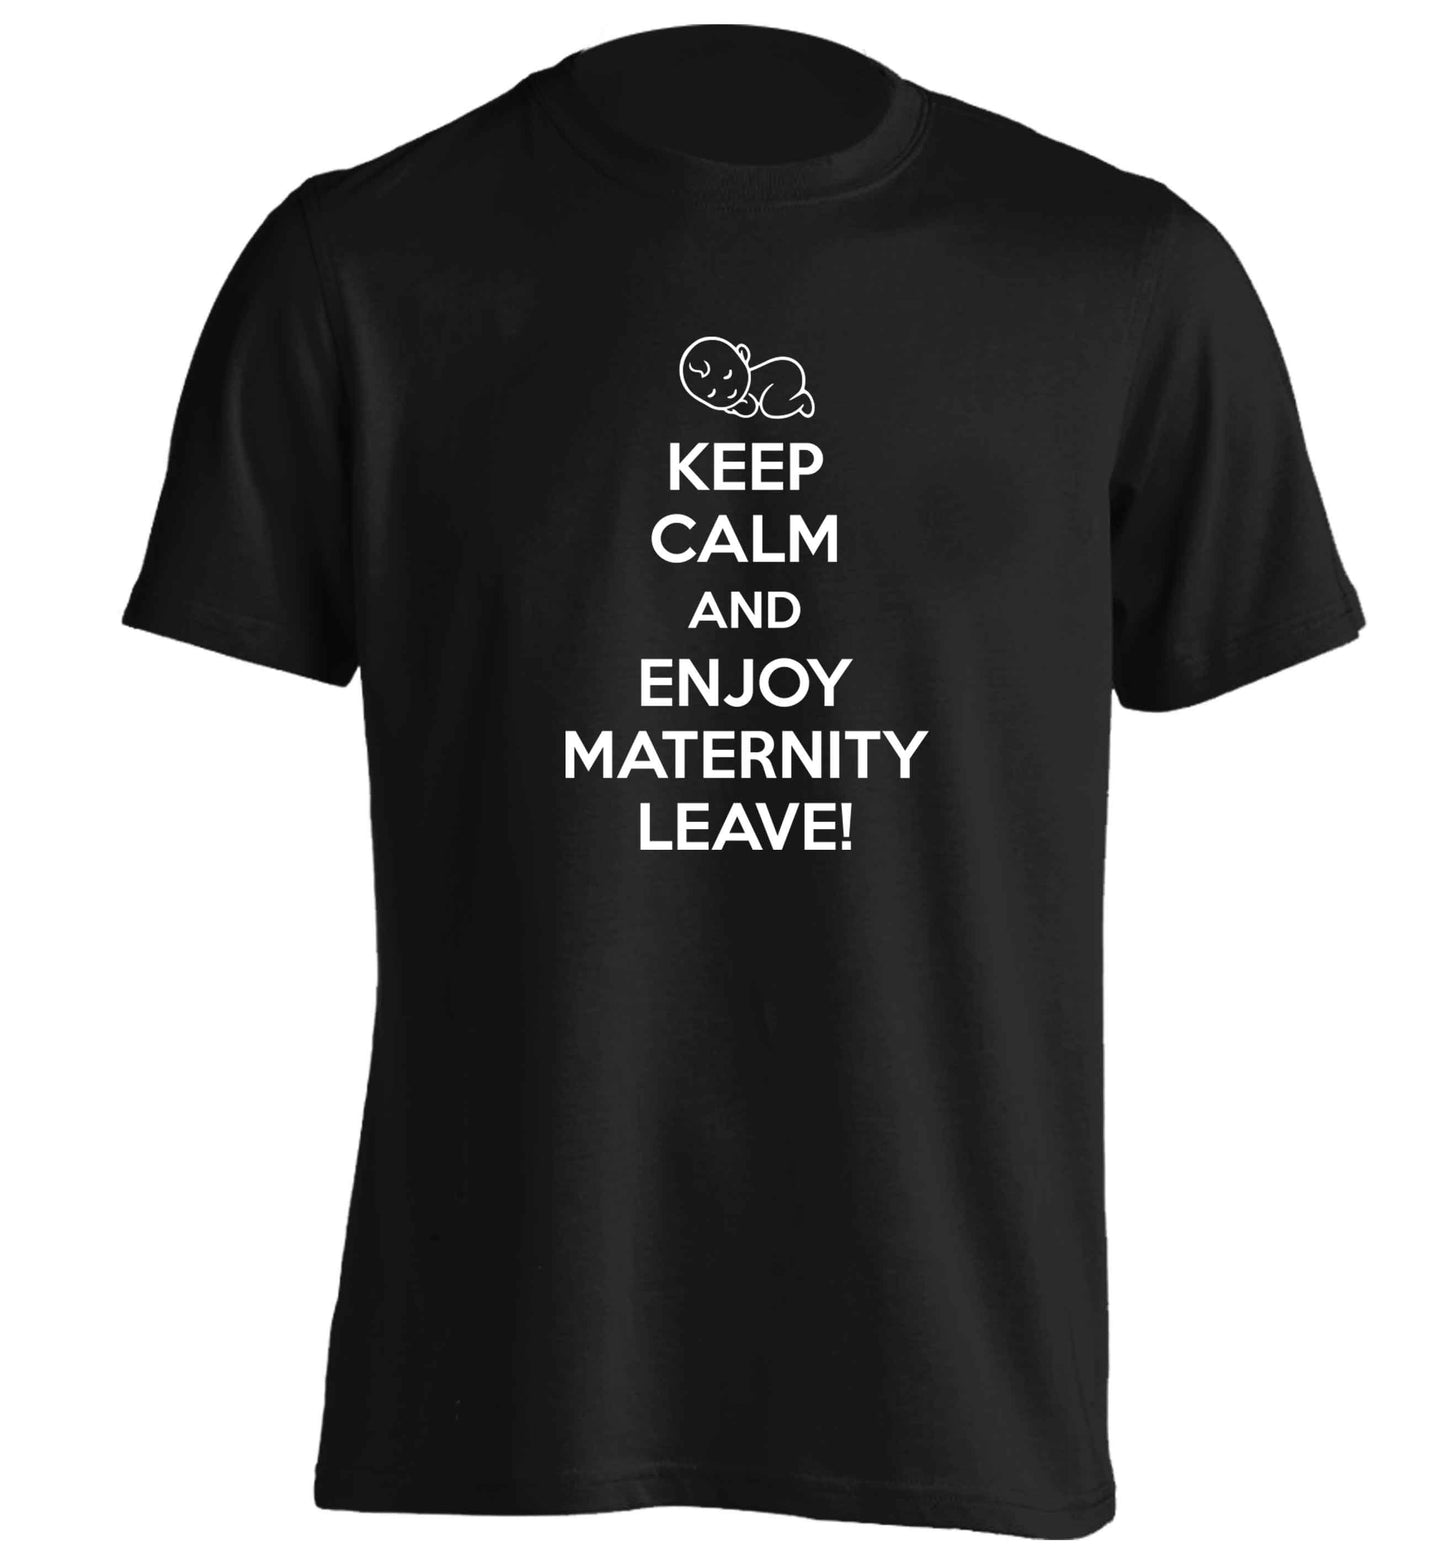 Keep calm and enjoy maternity leave adults unisex black Tshirt 2XL